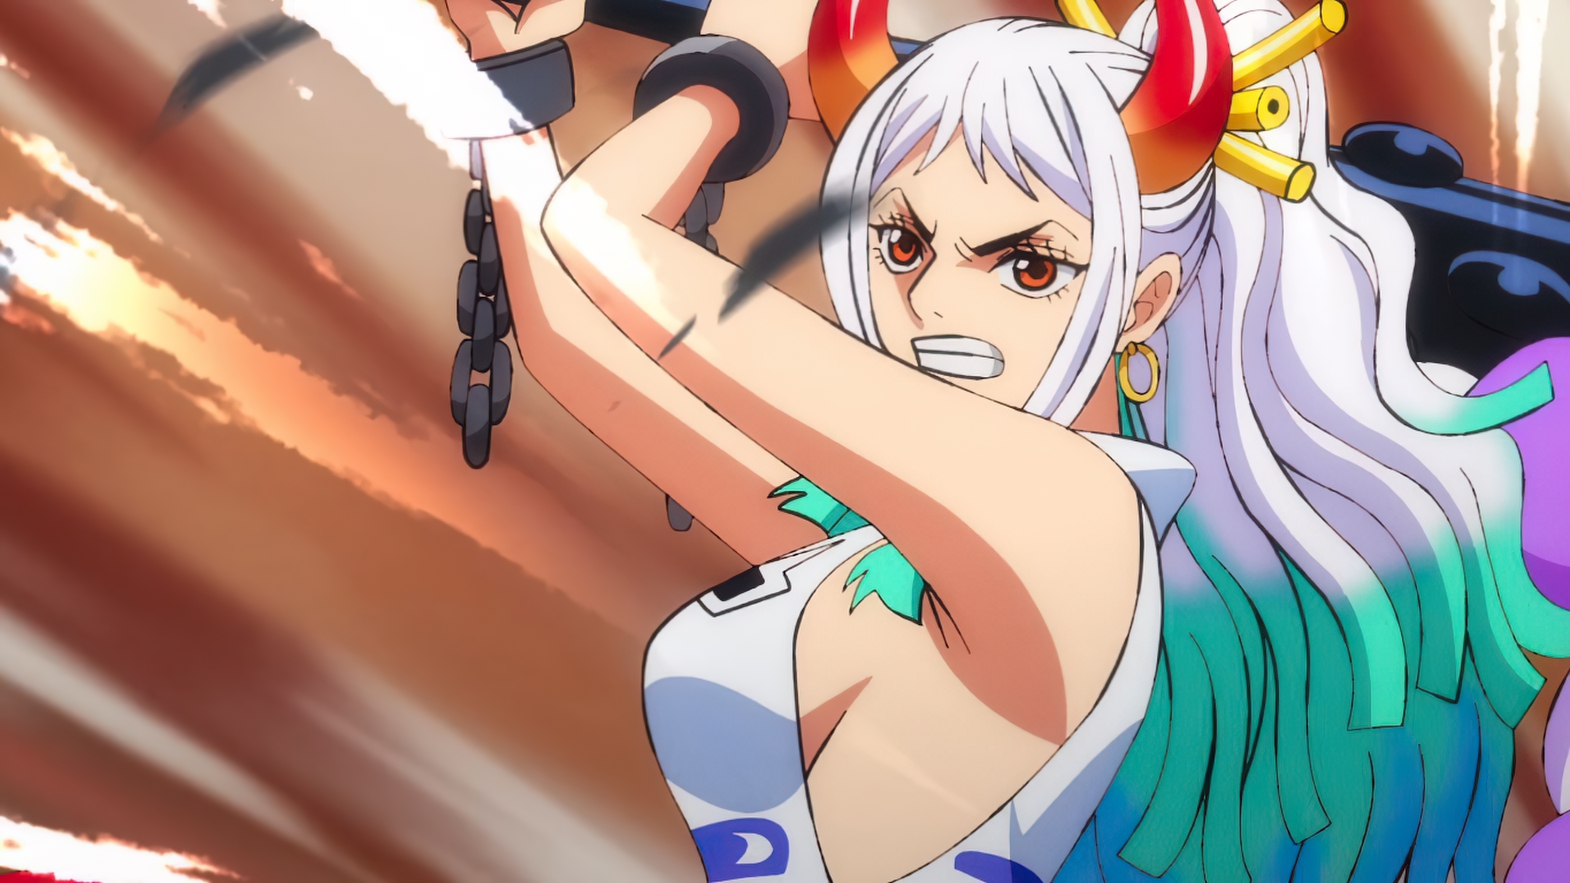 Nico Robin beautiful - One Piece ep 1021 by Berg-anime on DeviantArt